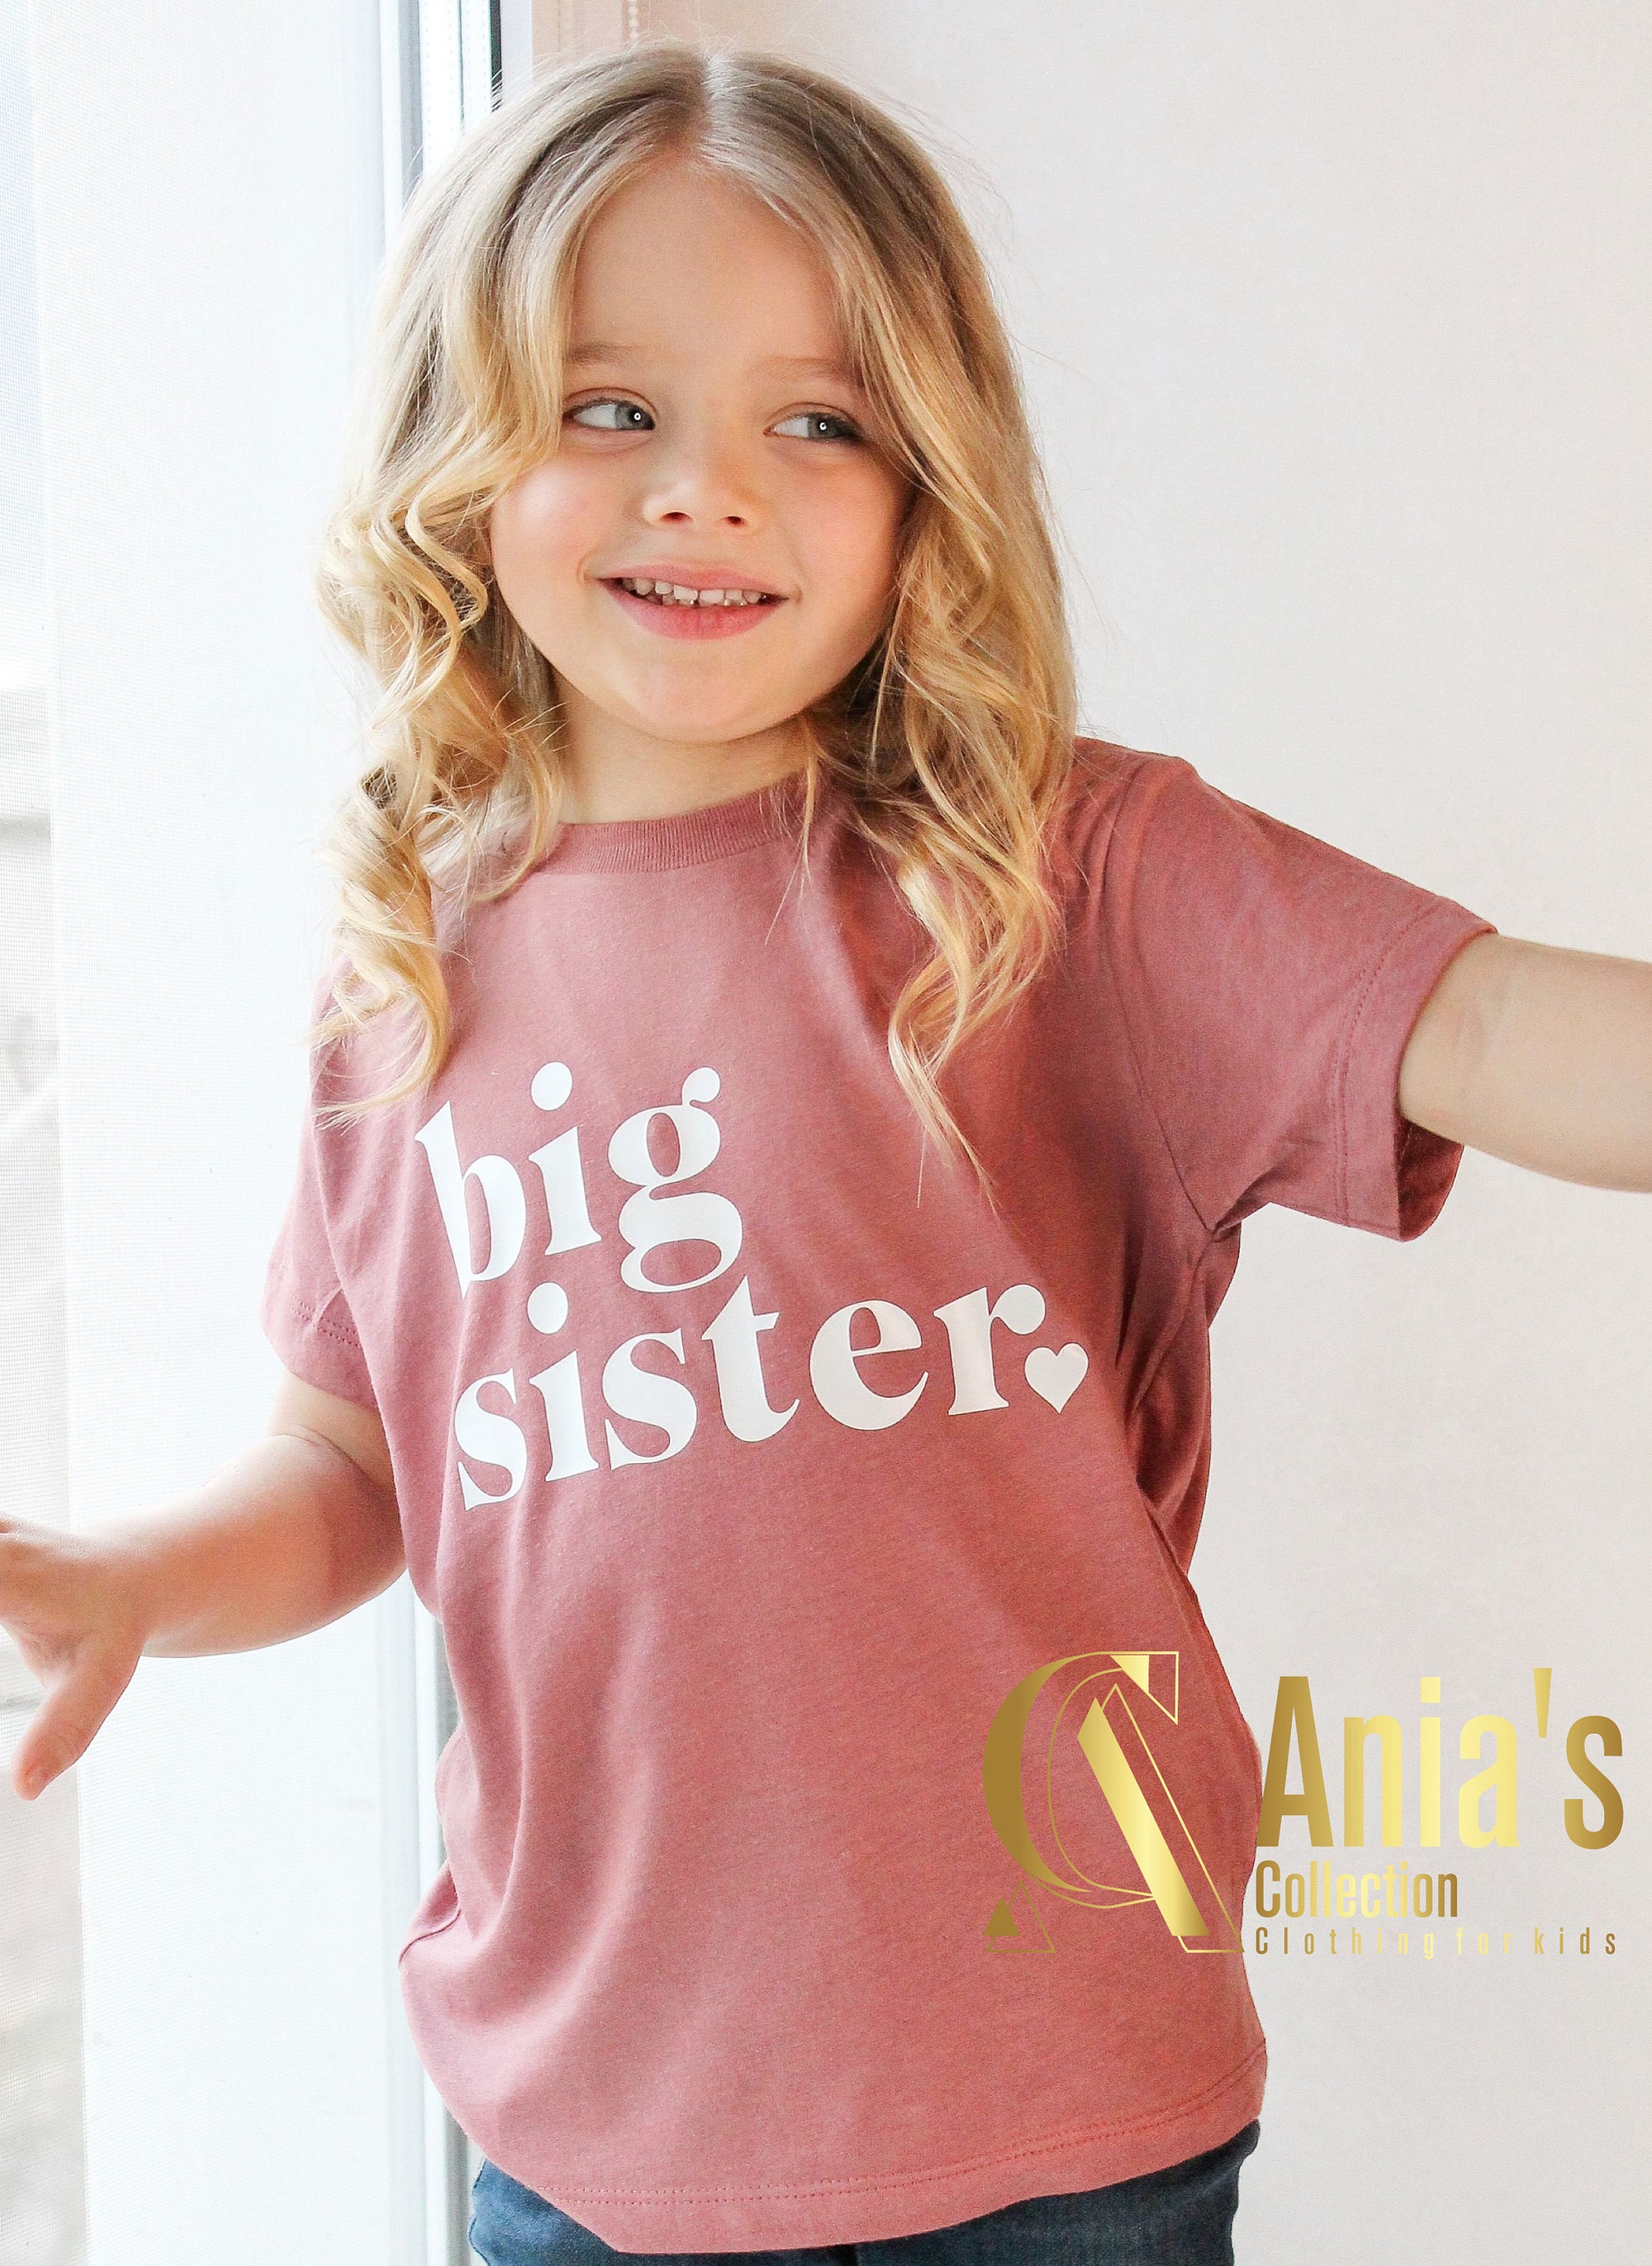 Discover big sister shirt, big sis t-shirt, big sister t-shirt, big sis, big sister tee shirt, big sister tshirt, baby announcement